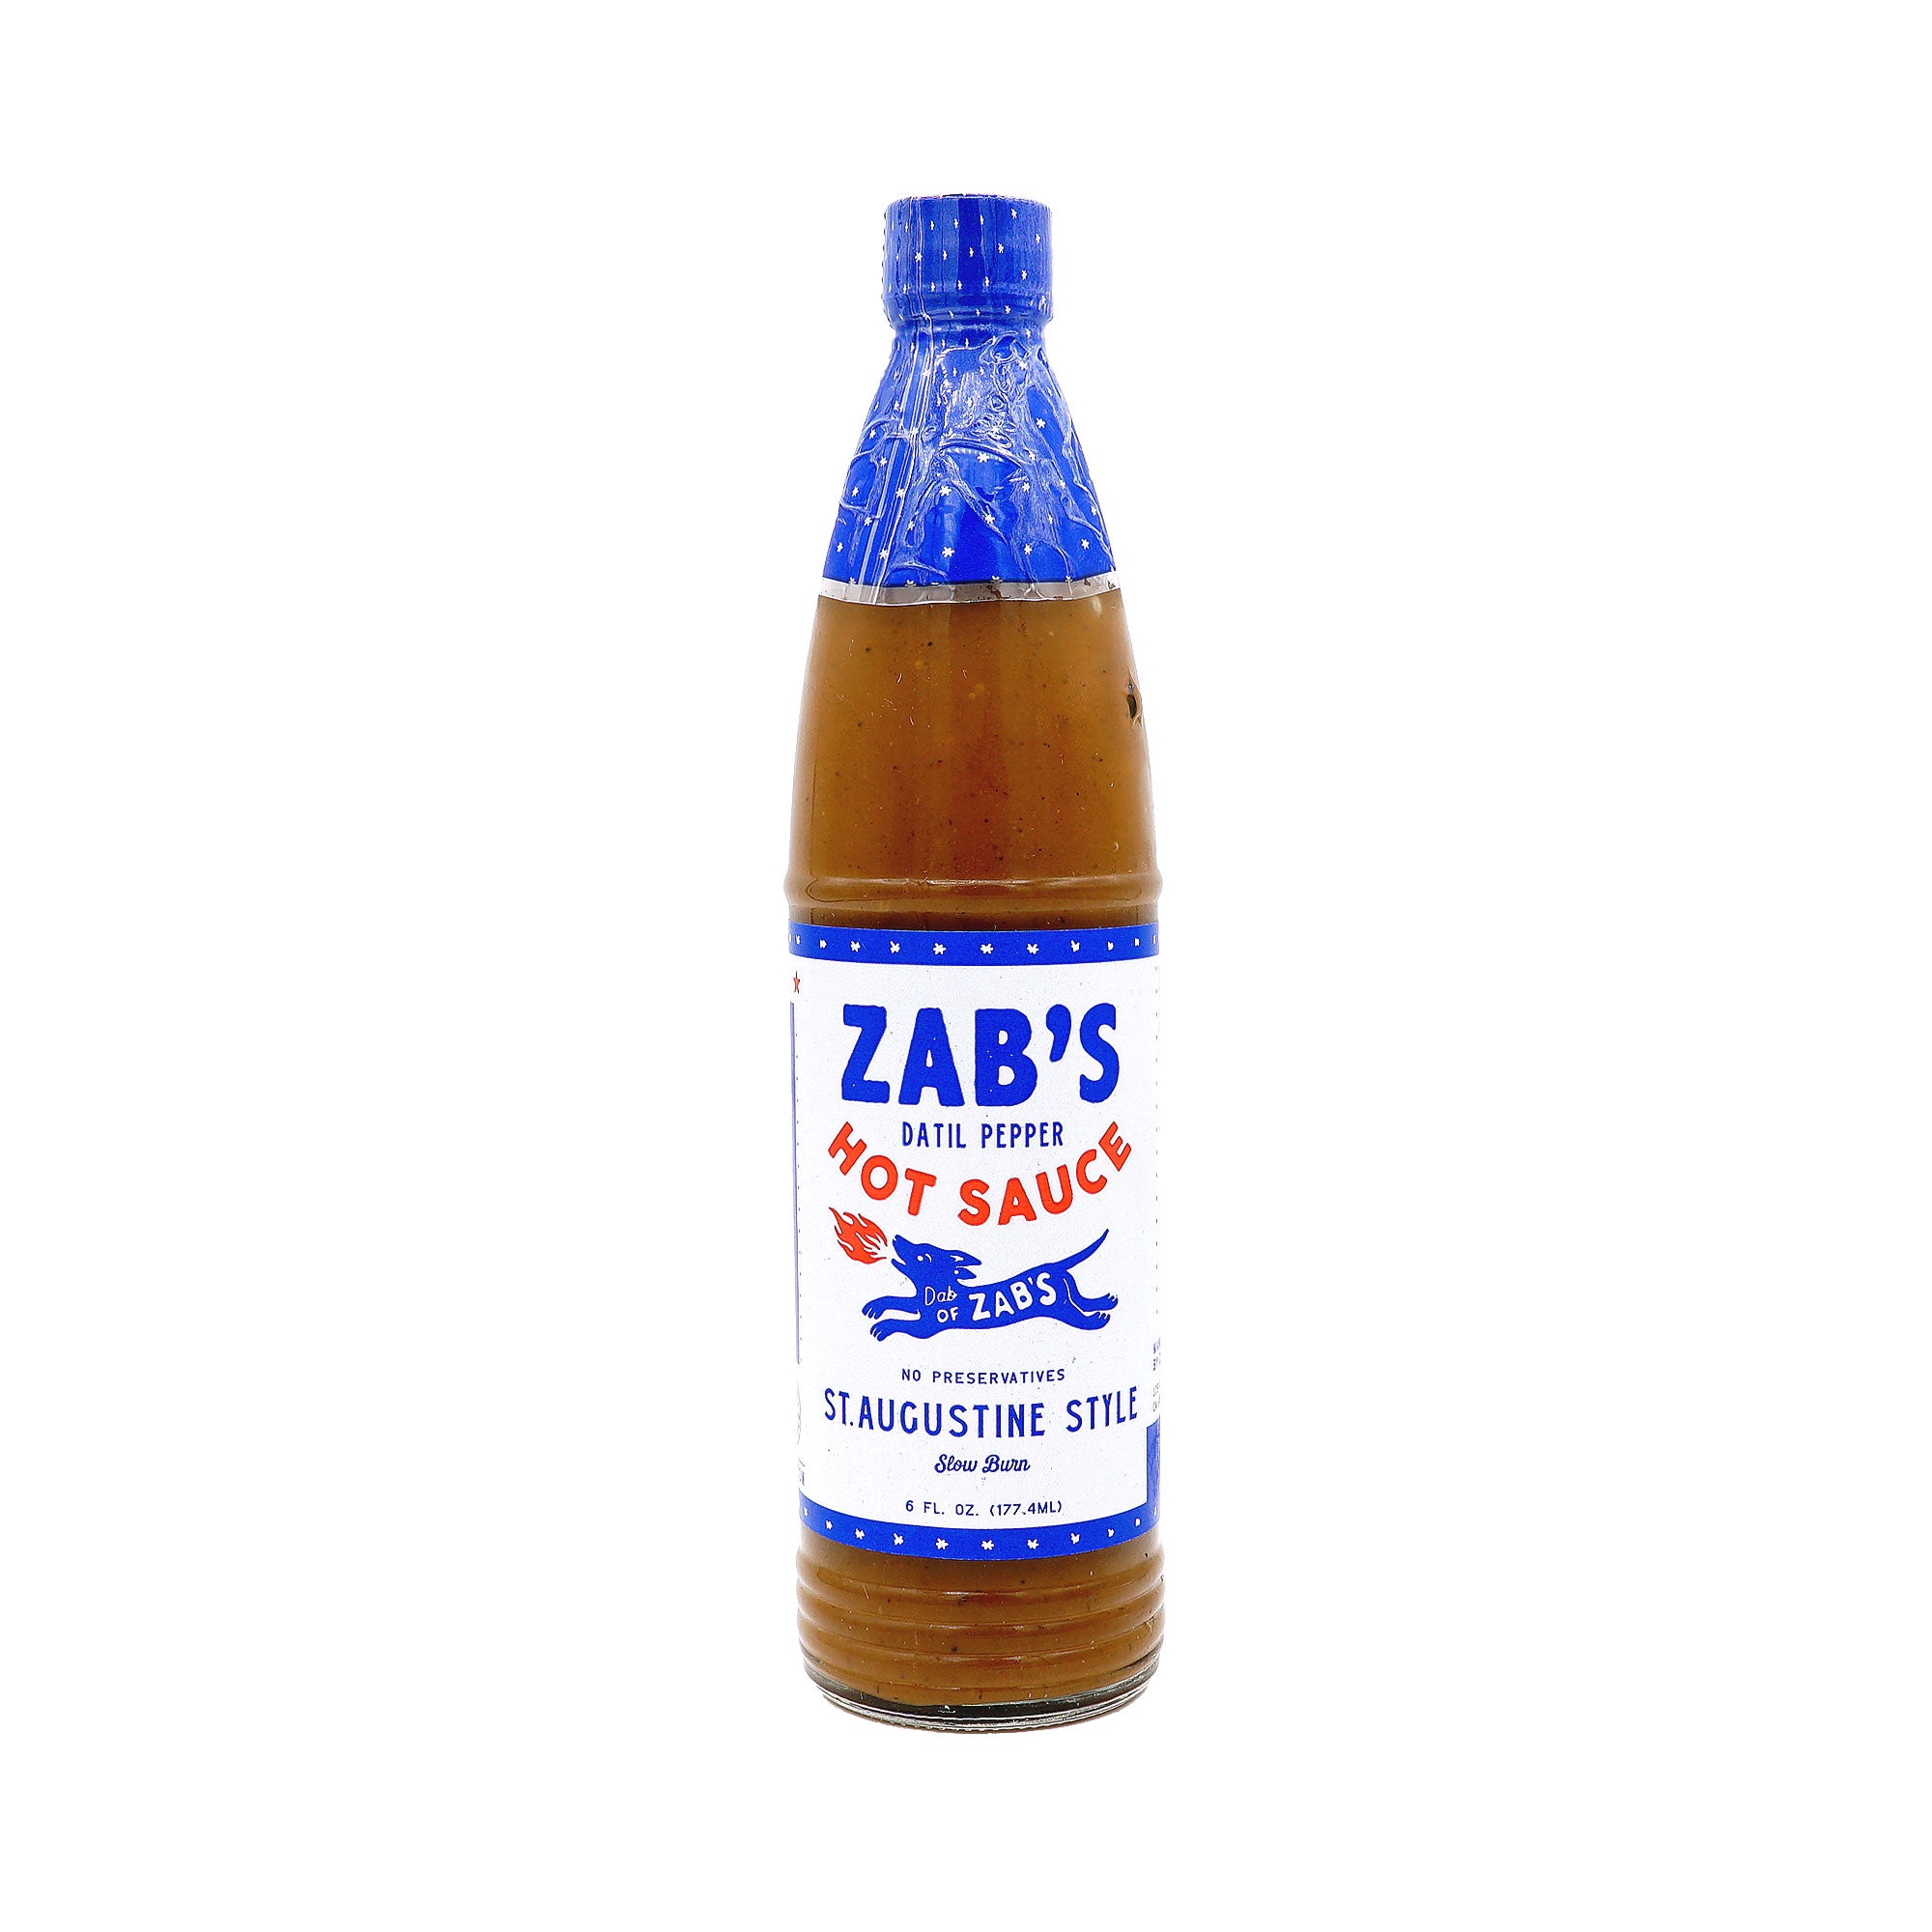 Zab's Datil Pepper Hot Sauce - Zab's Datil Pepper Hot Sauce - St. Augustine Style - Mat's Hot Shop - Australia's Hot Sauce Store